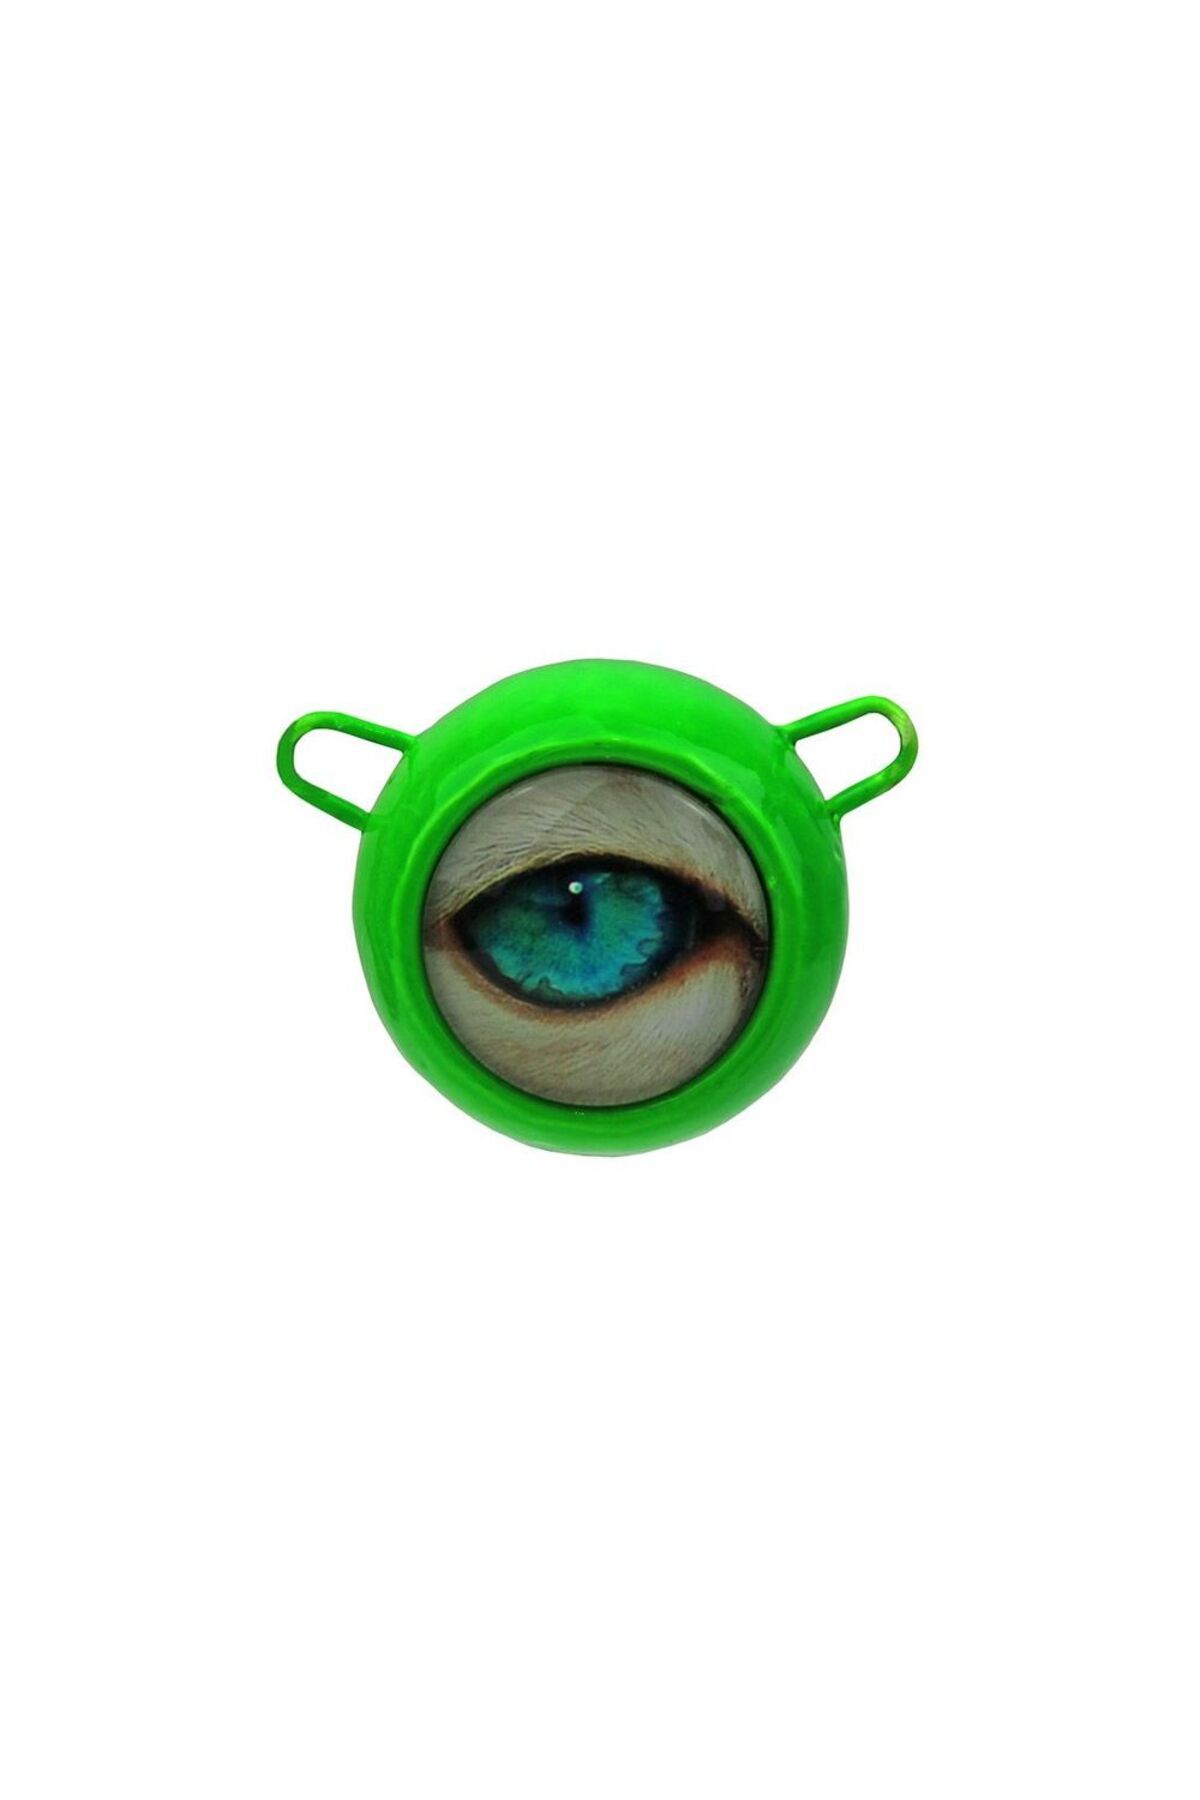 Anchor Melek Göz Yeşil 200 gr